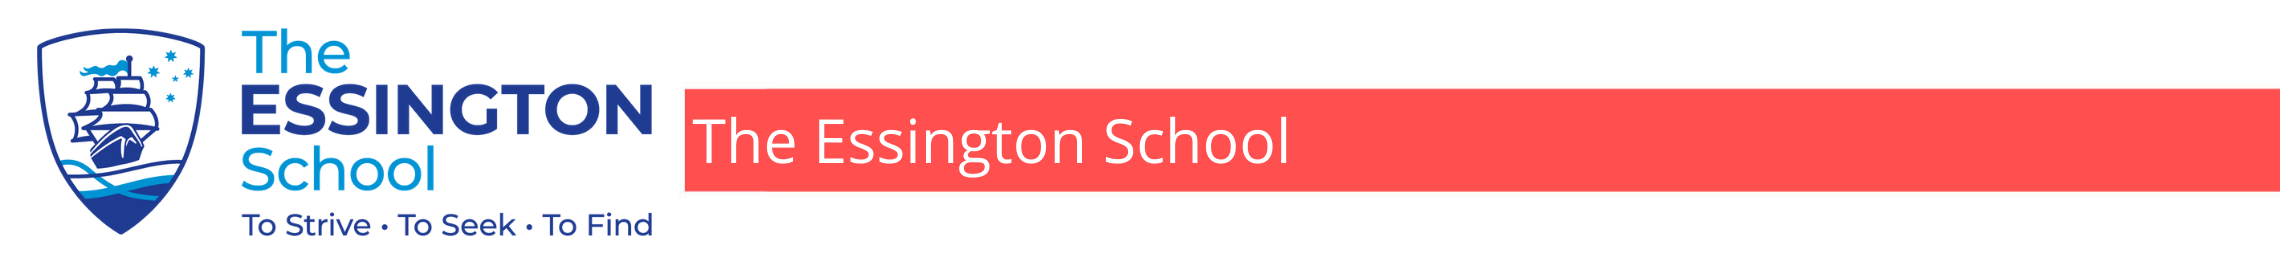 The Essington School Banner